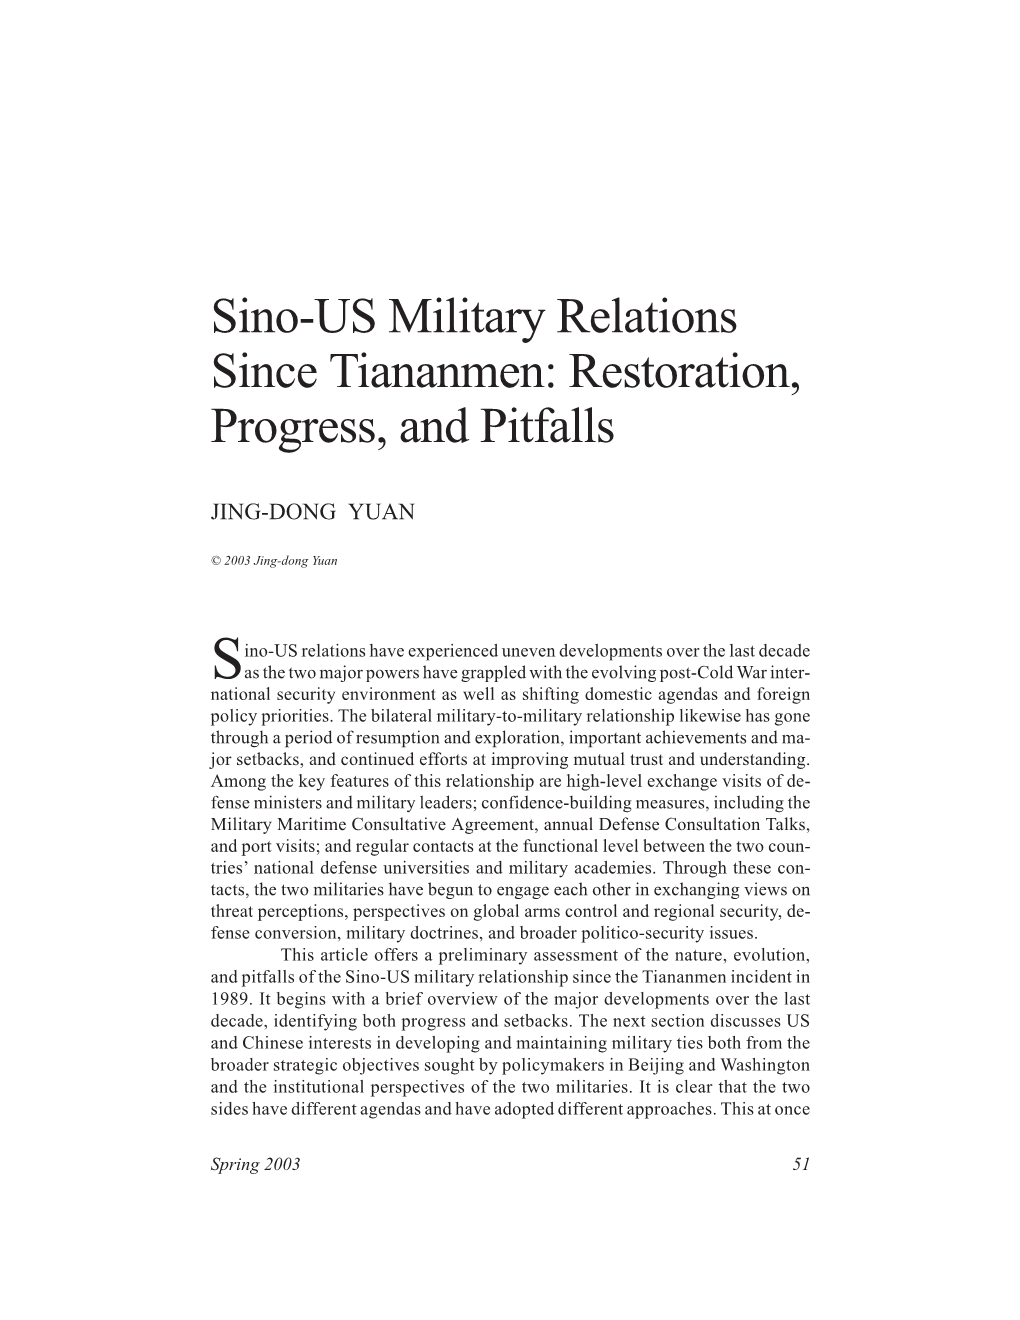 Sino-US Military Relations Since Tiananmen: Restoration, Progress, and Pitfalls